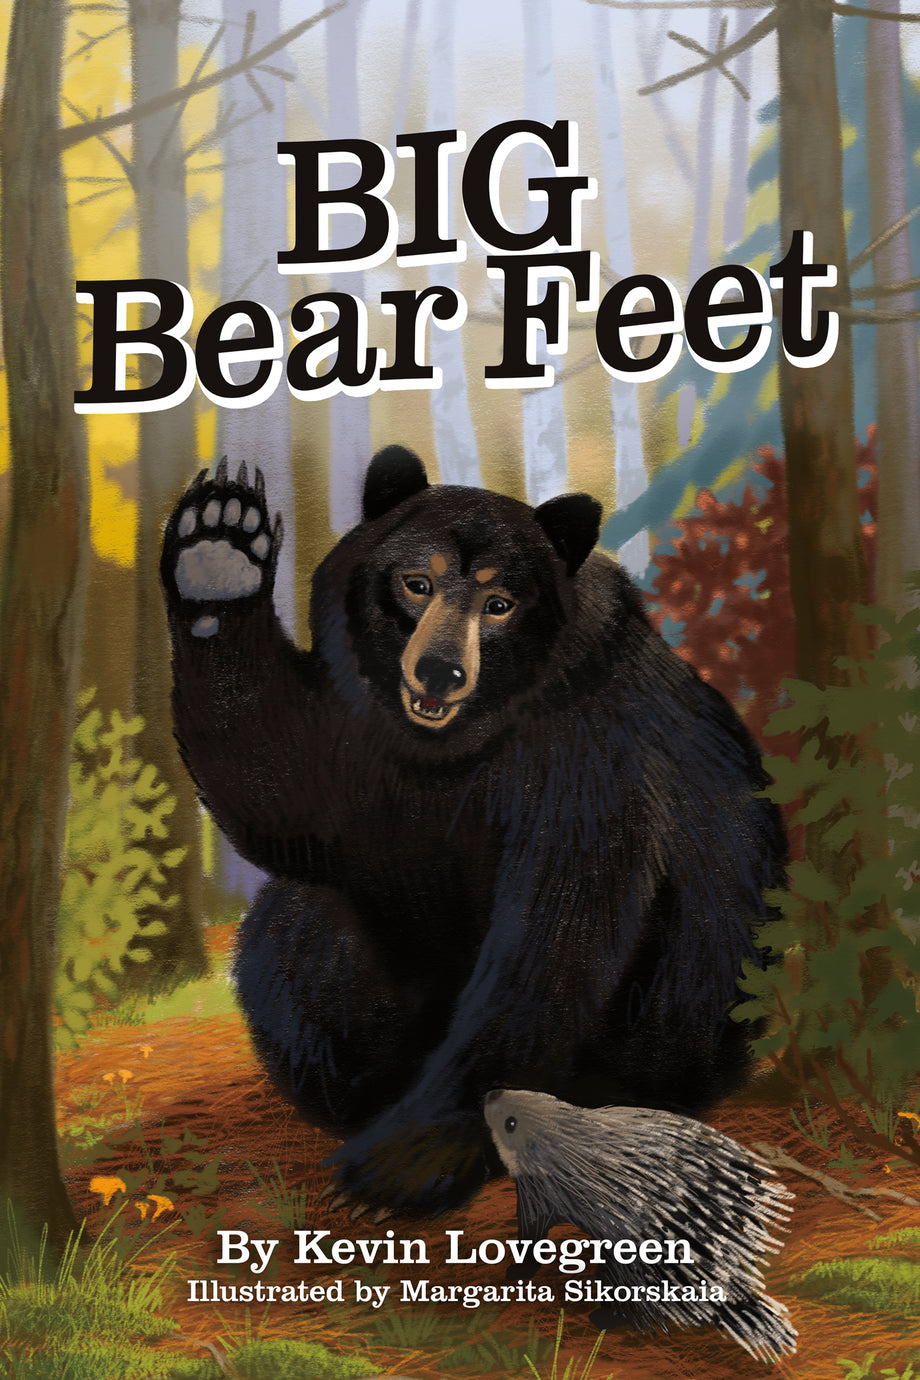 Bare, Bear Feet at the Minnesota Zoo Stock Photo - Image of